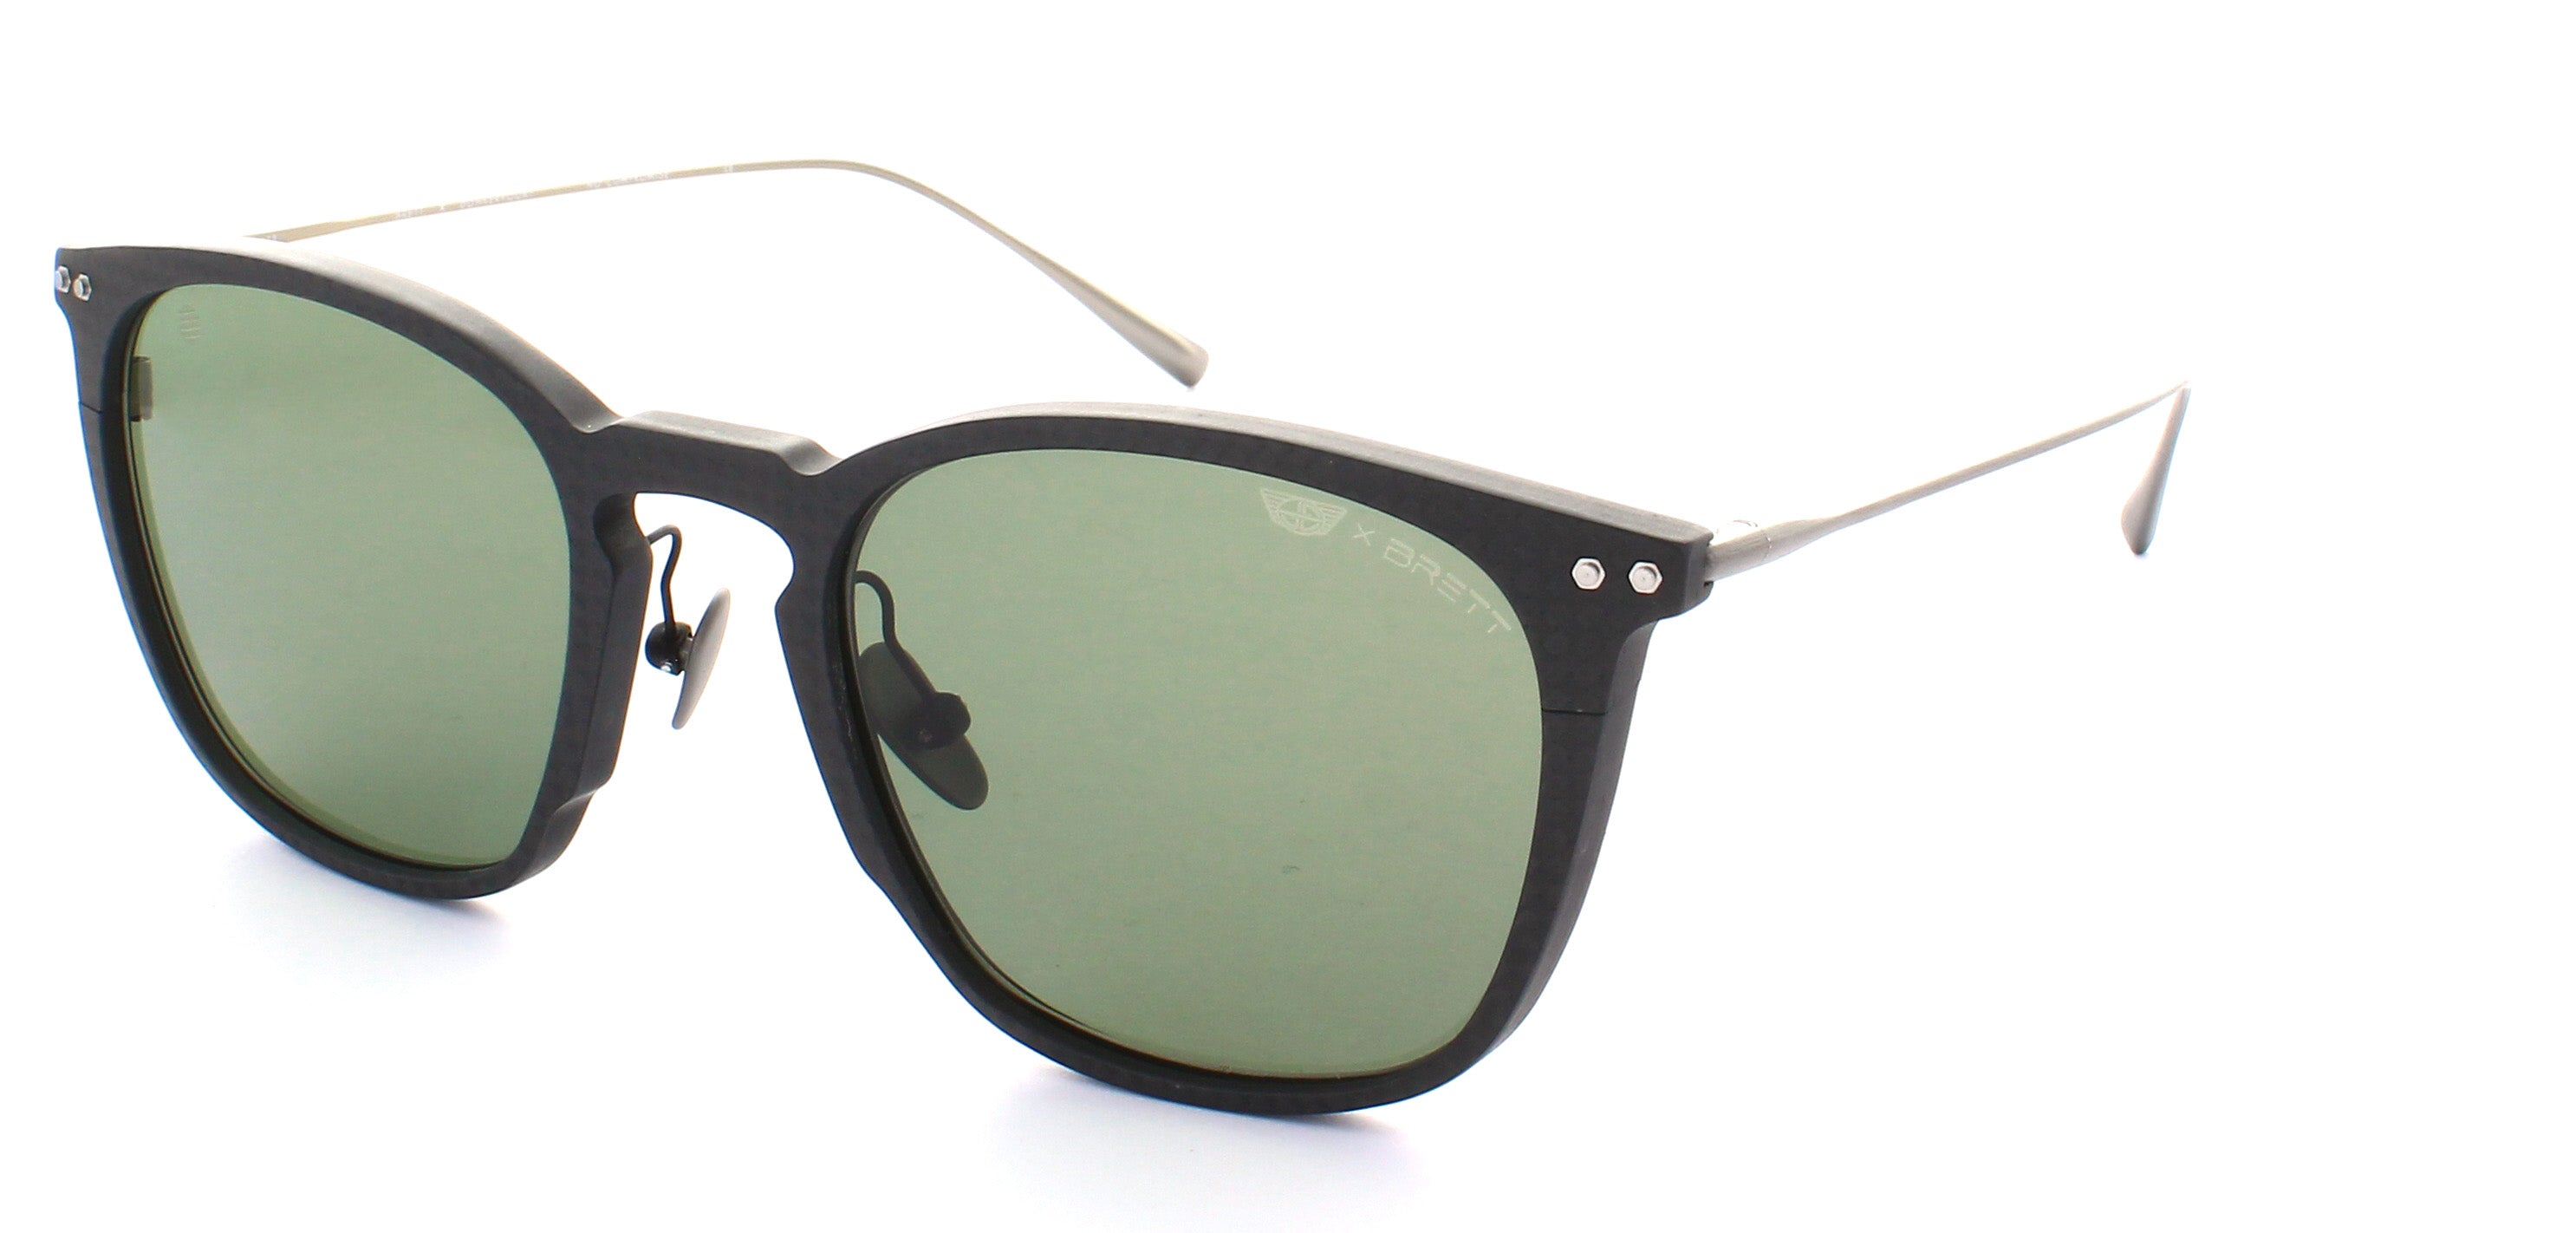 Sunglasses S7 - Matt Black